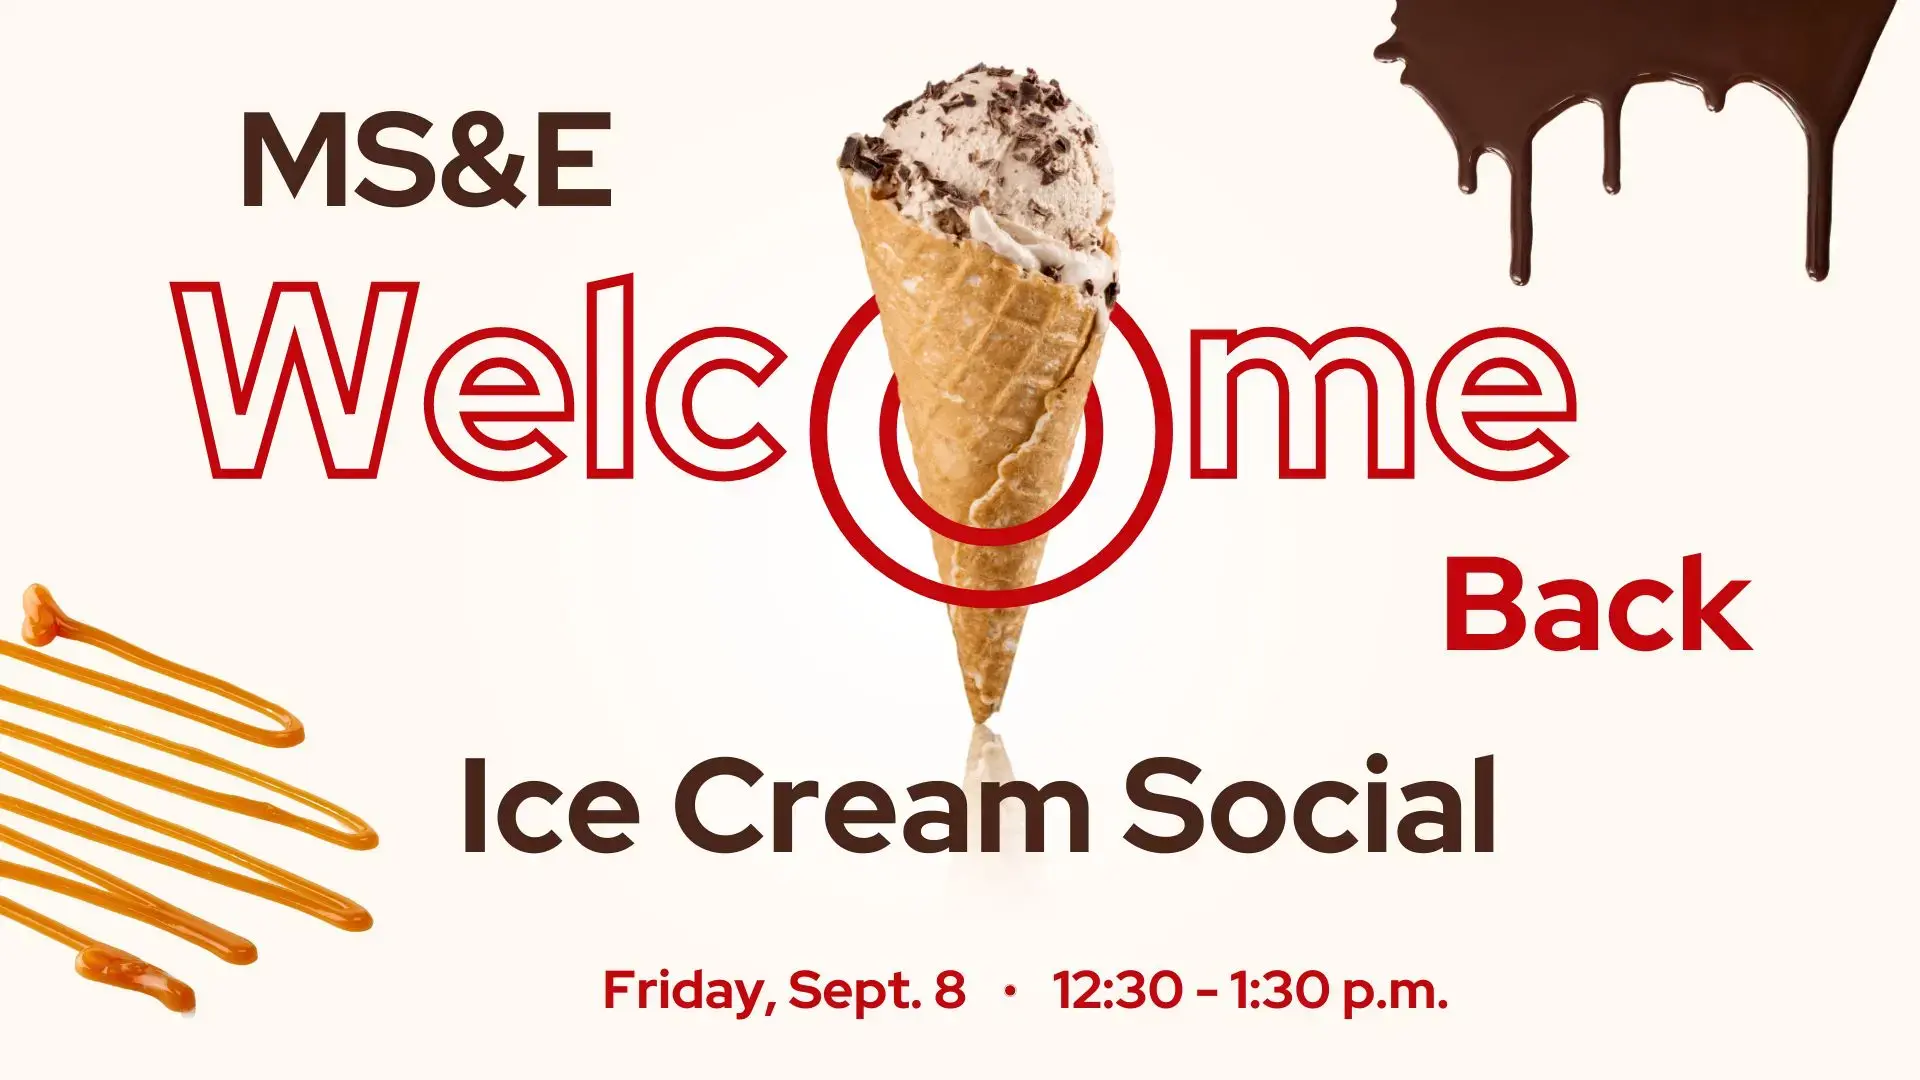 MS&E Welcome Back Ice Cream Social